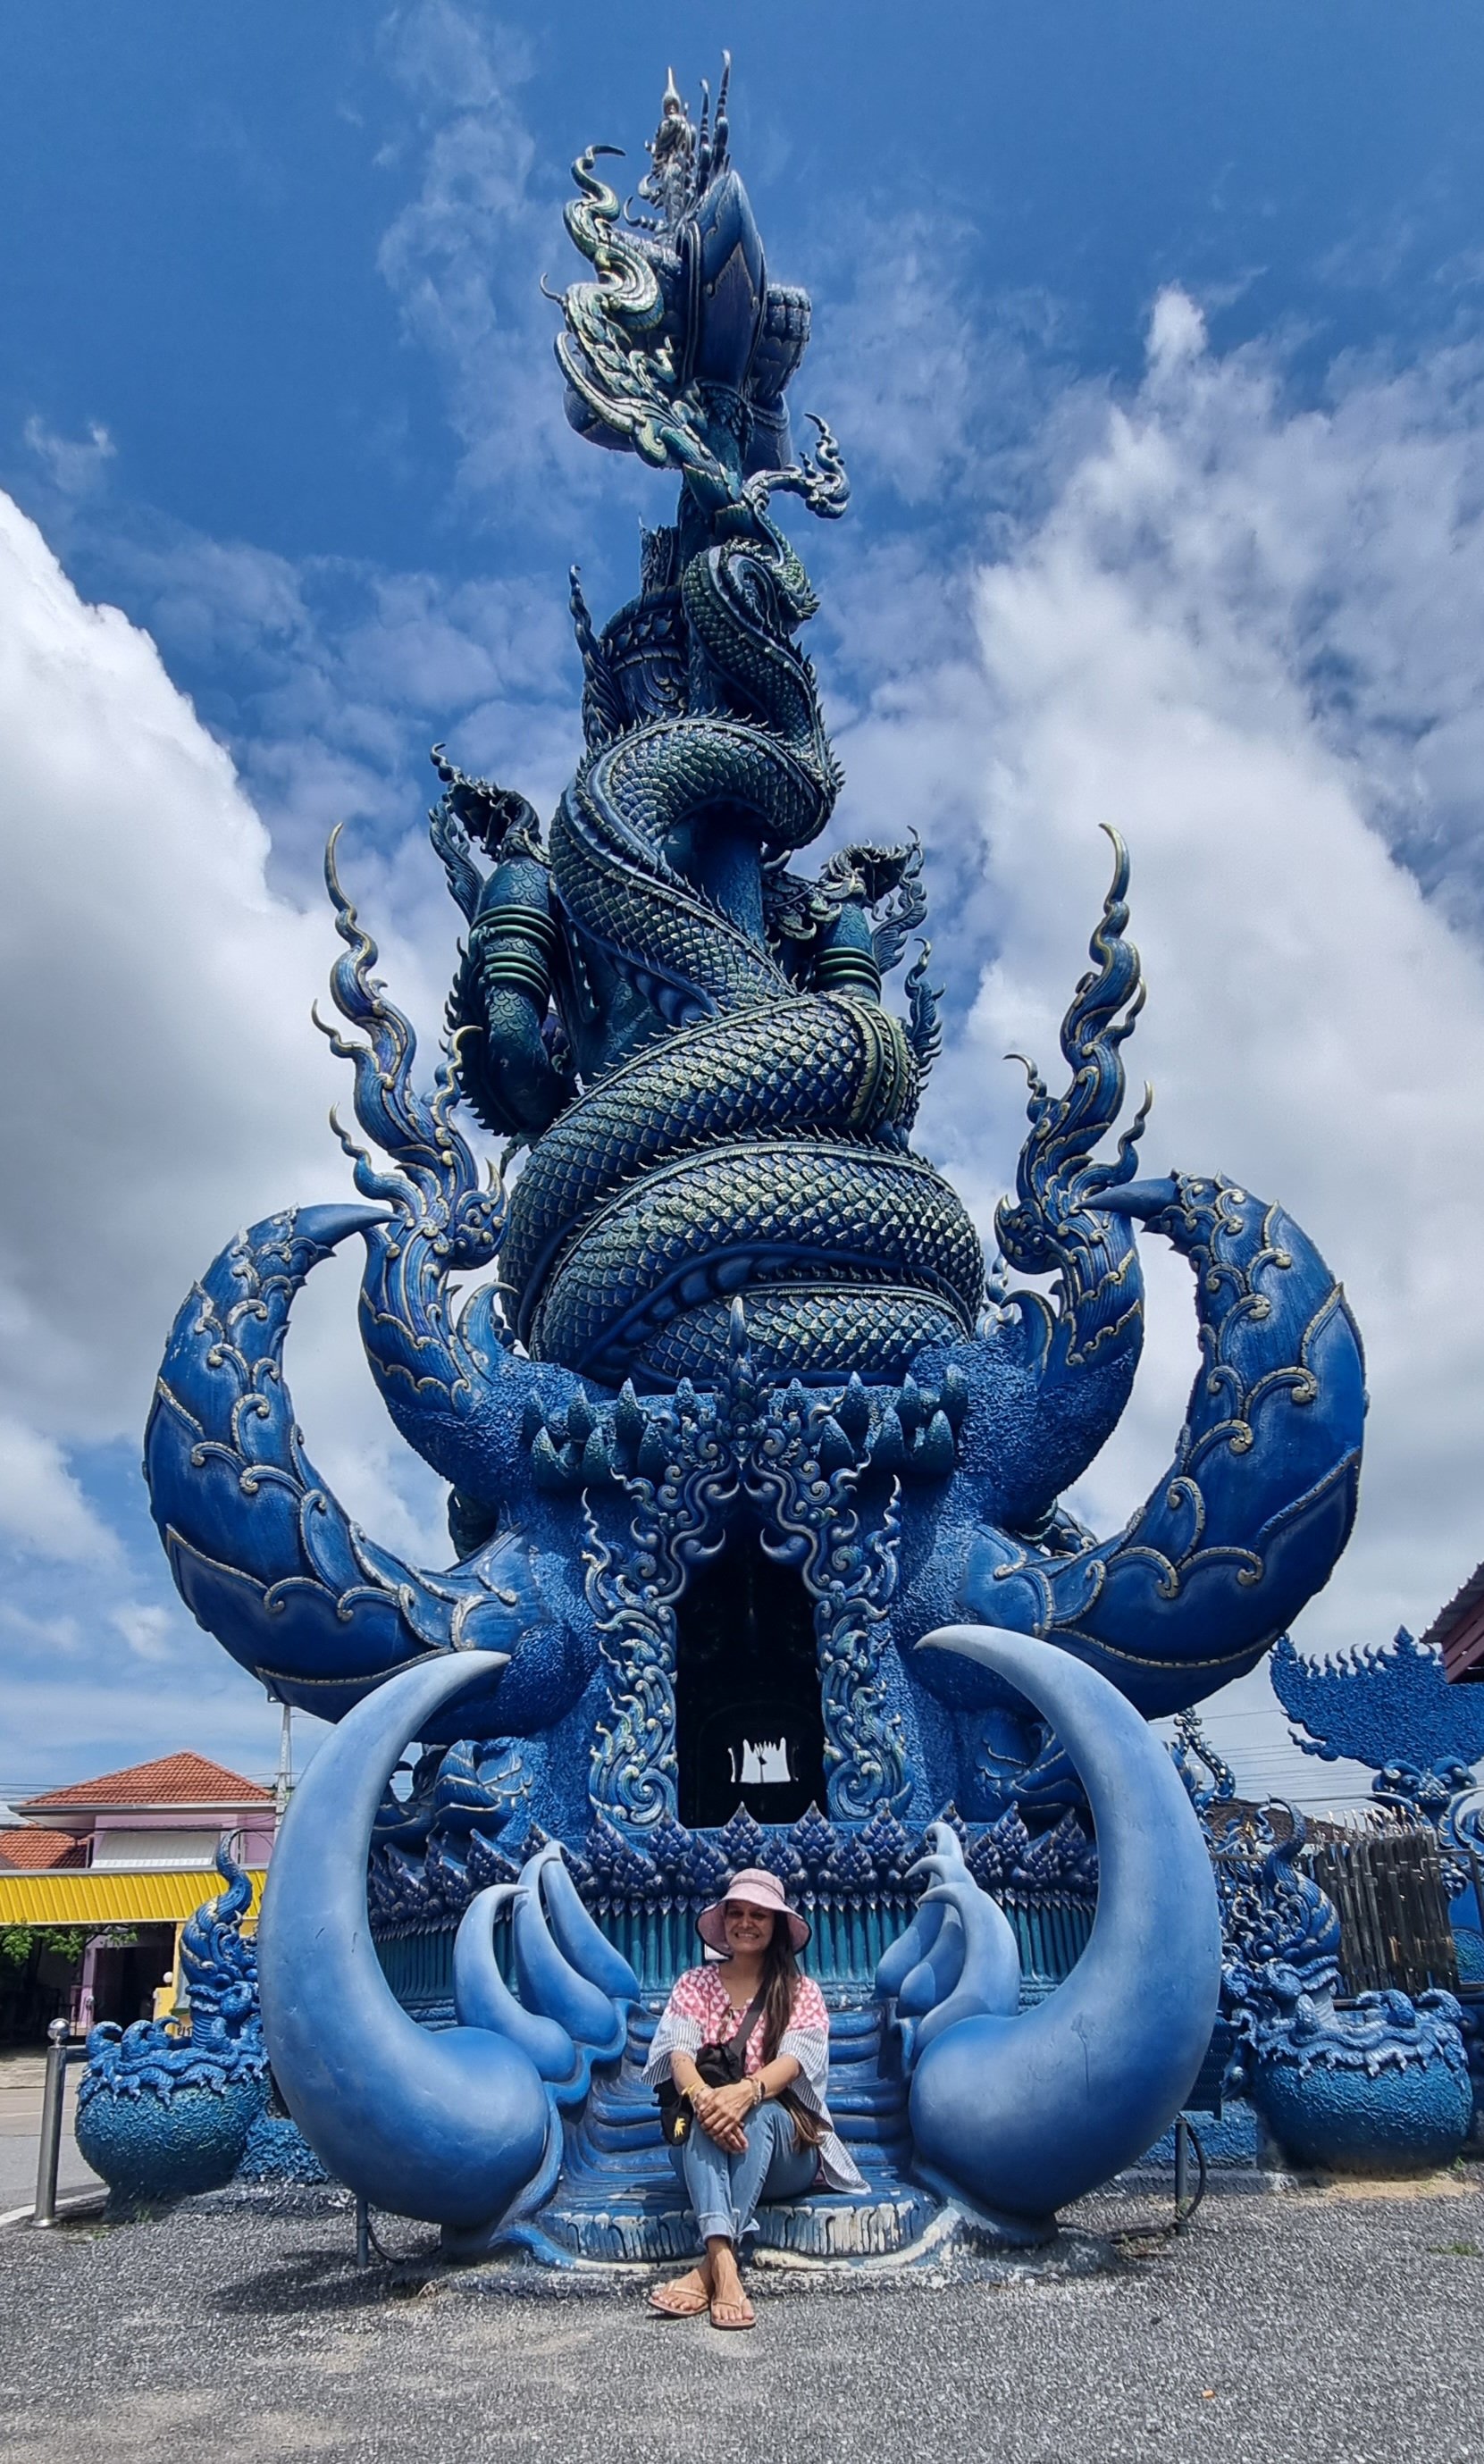 At the Blue Temple, Chiang Rai.